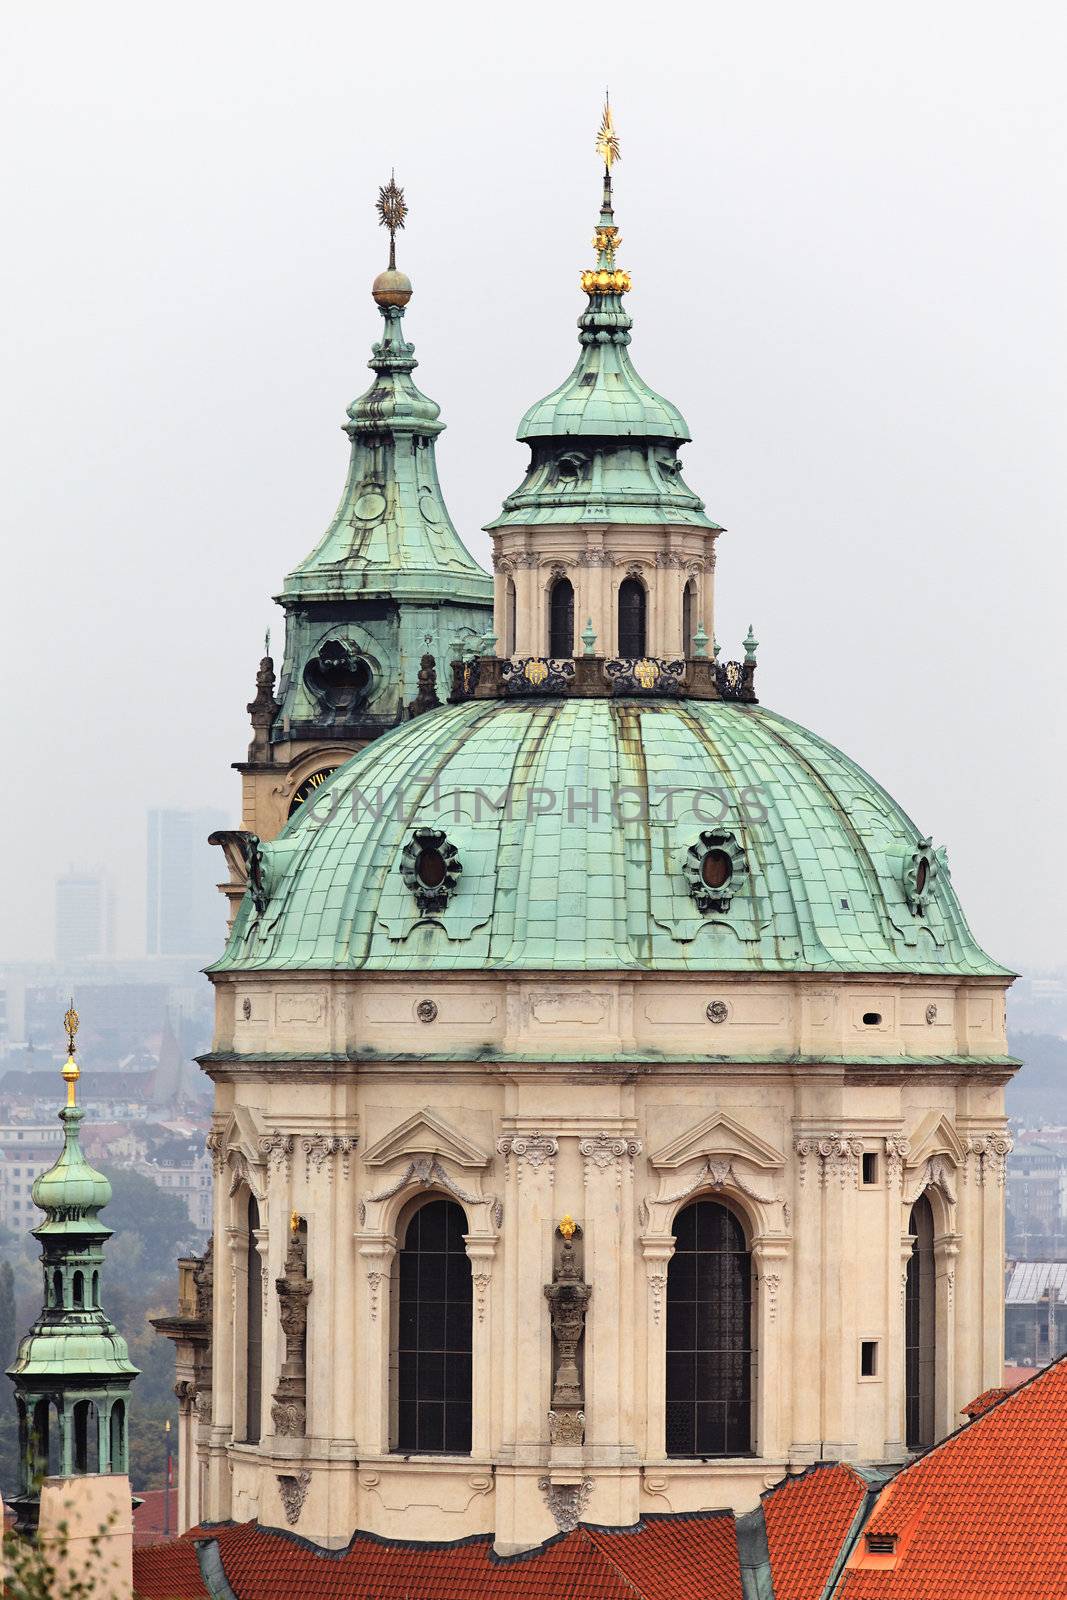 Saint Nicholas church in Prague in winter